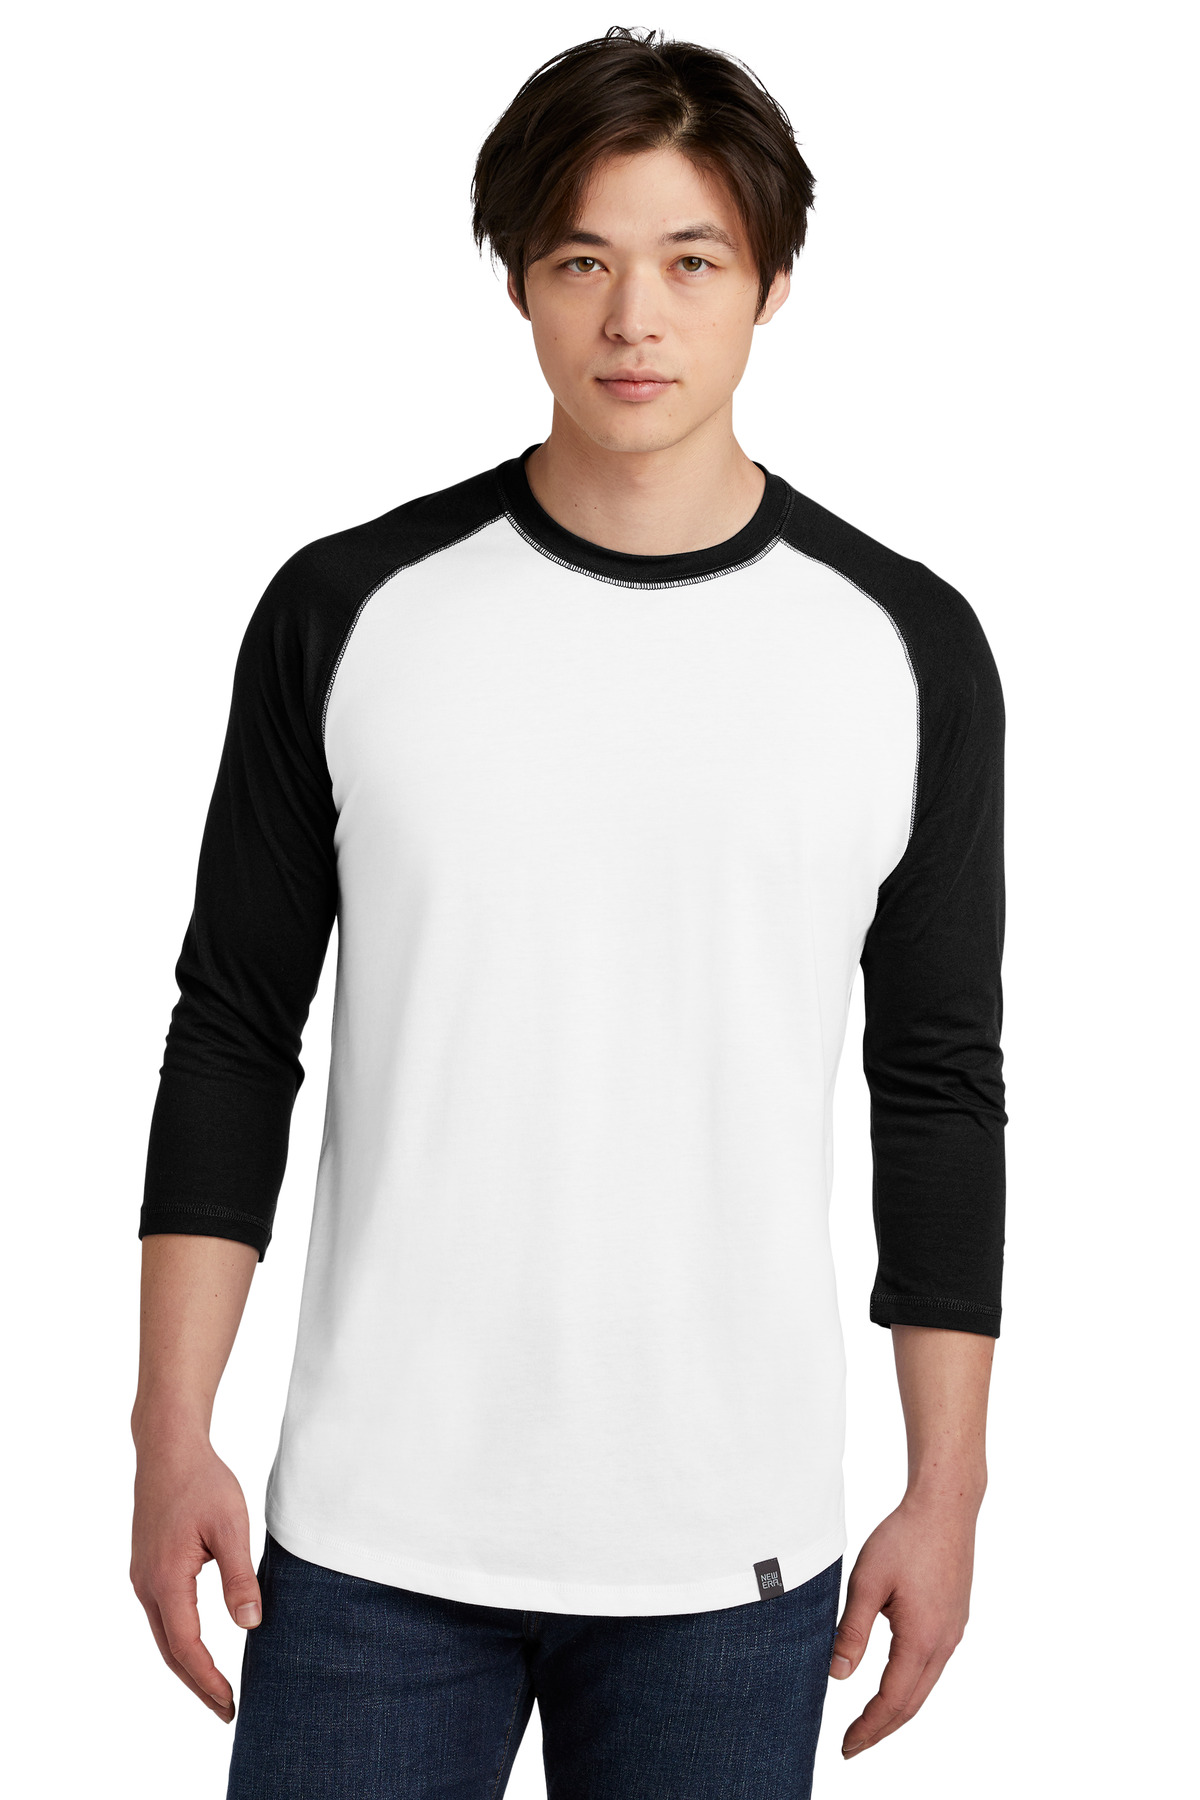 New Era Hospitality T-Shirts ® Heritage Blend 3/4-Sleeve Baseball Raglan Tee.-New Era